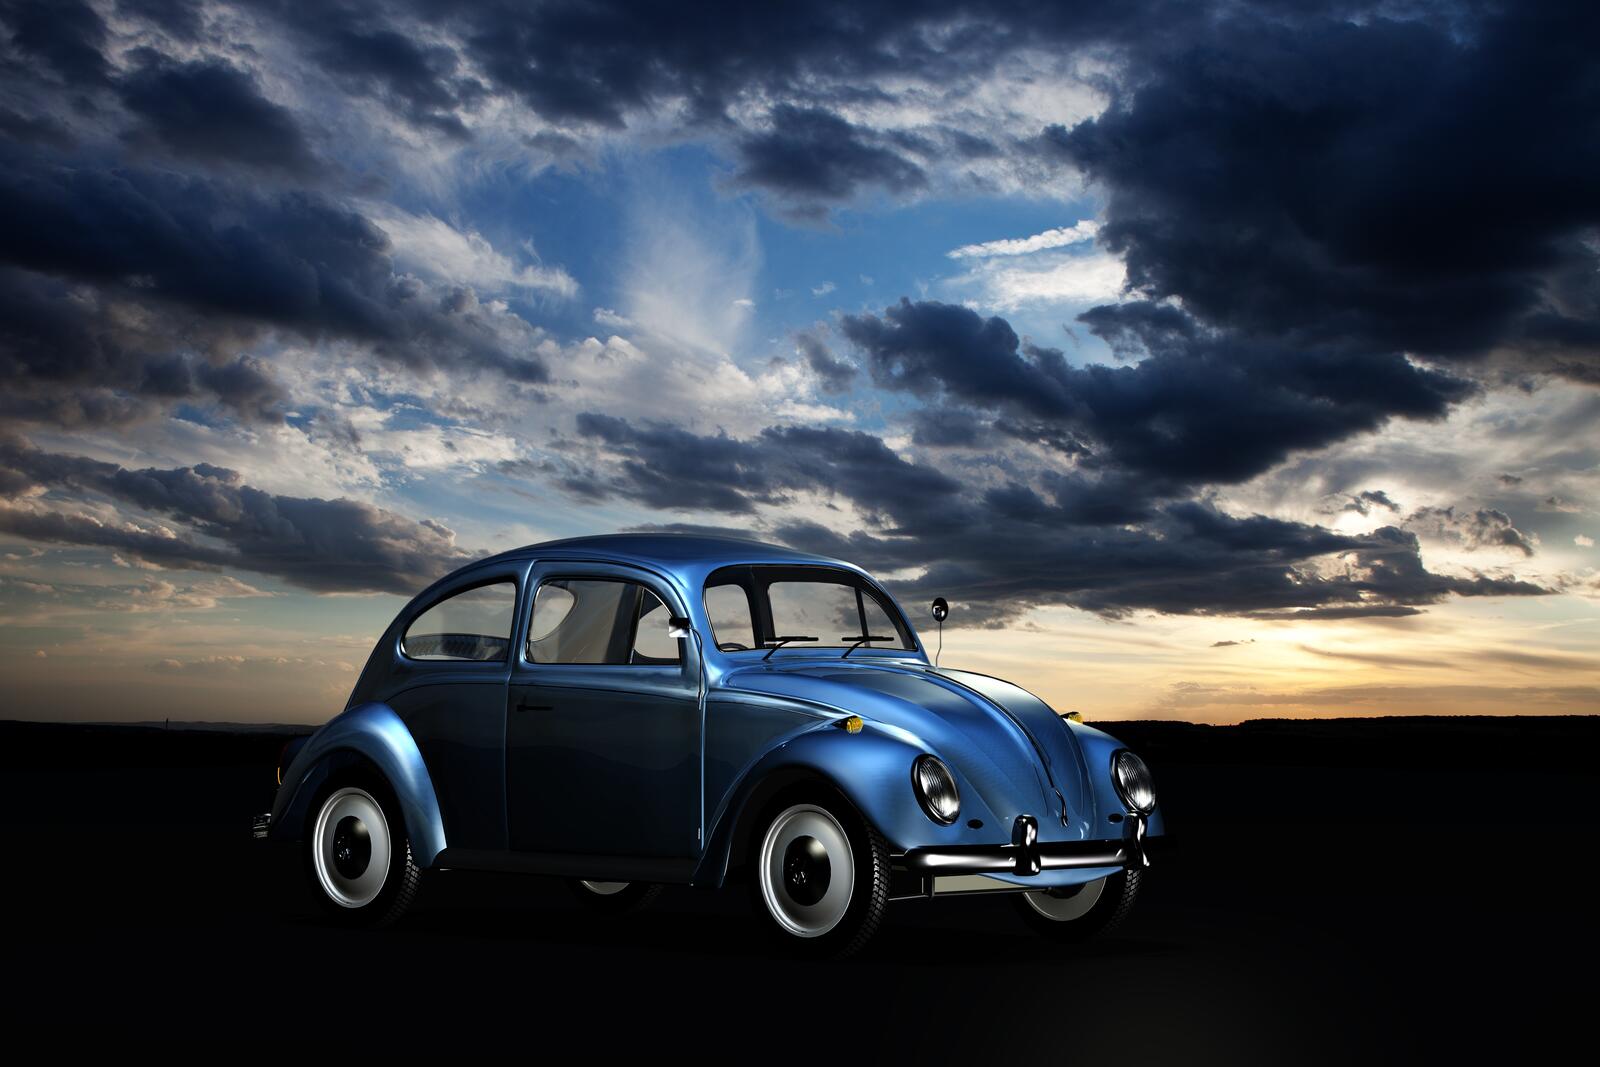 Free photo Blue Volkswagen Beetle at dusk.